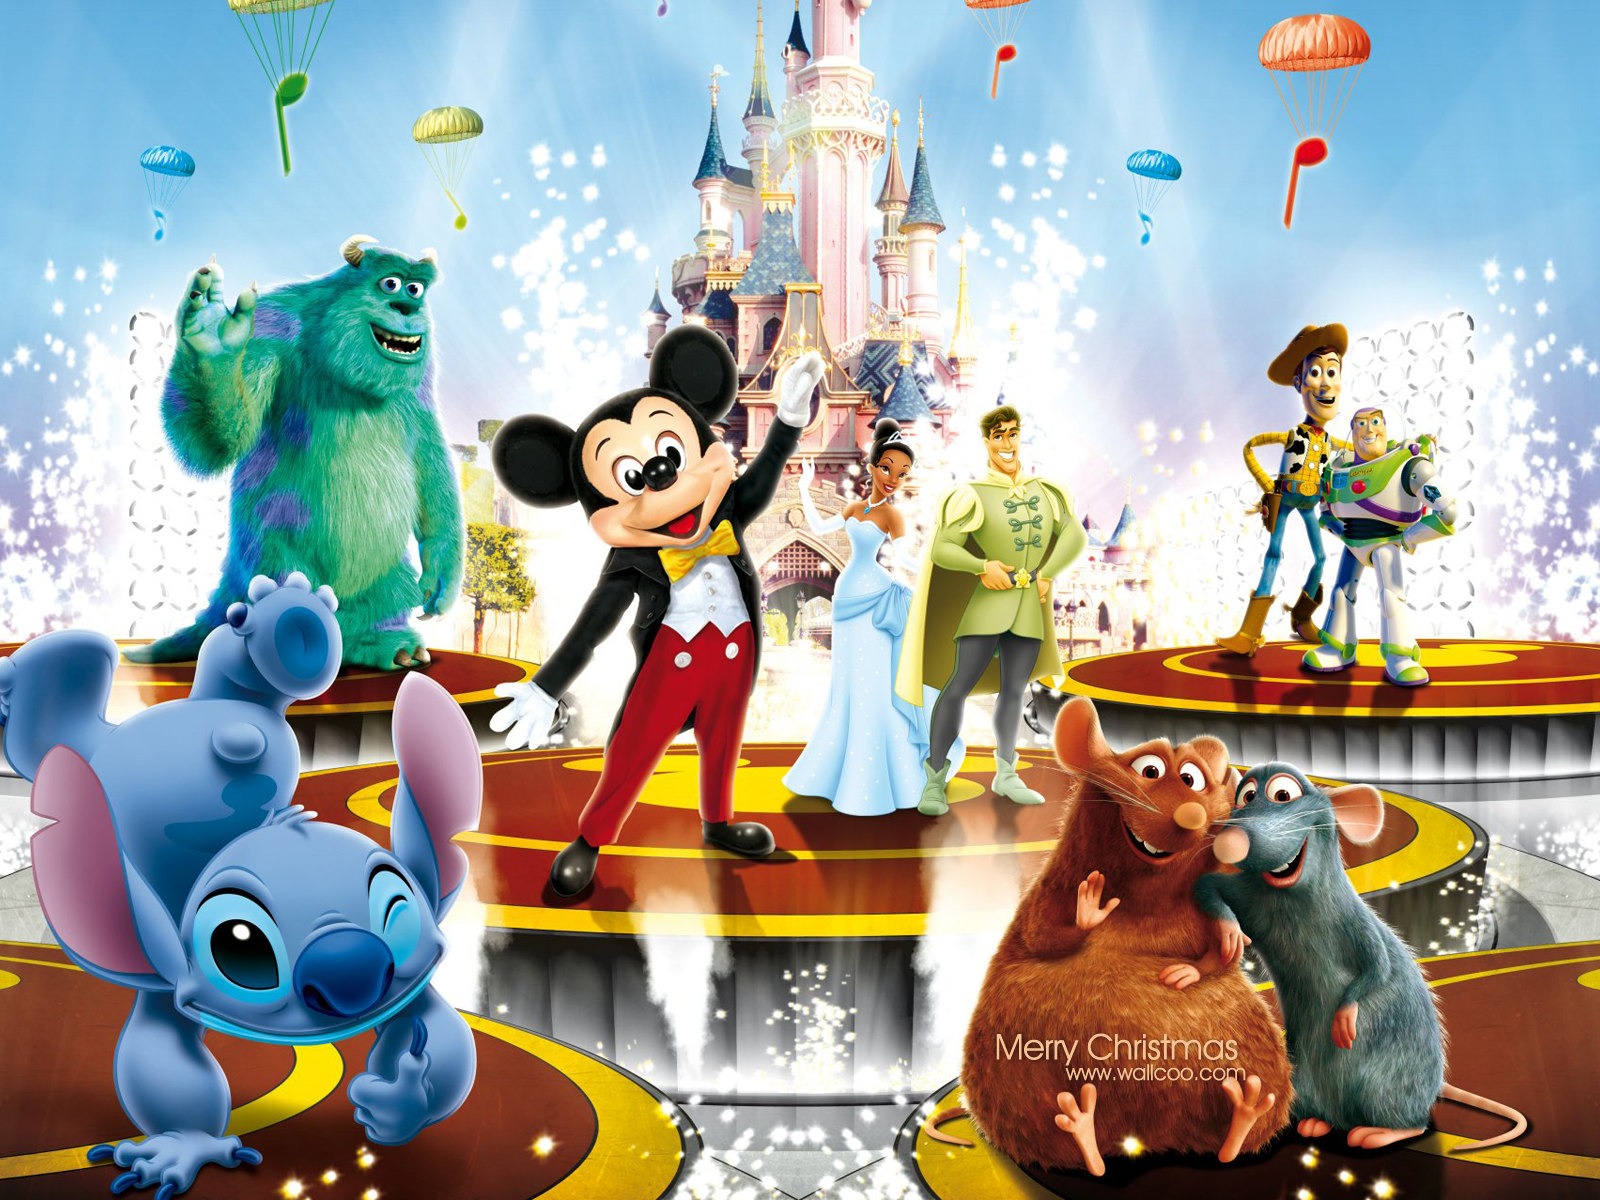 Disney movie cartoon character wallpaper